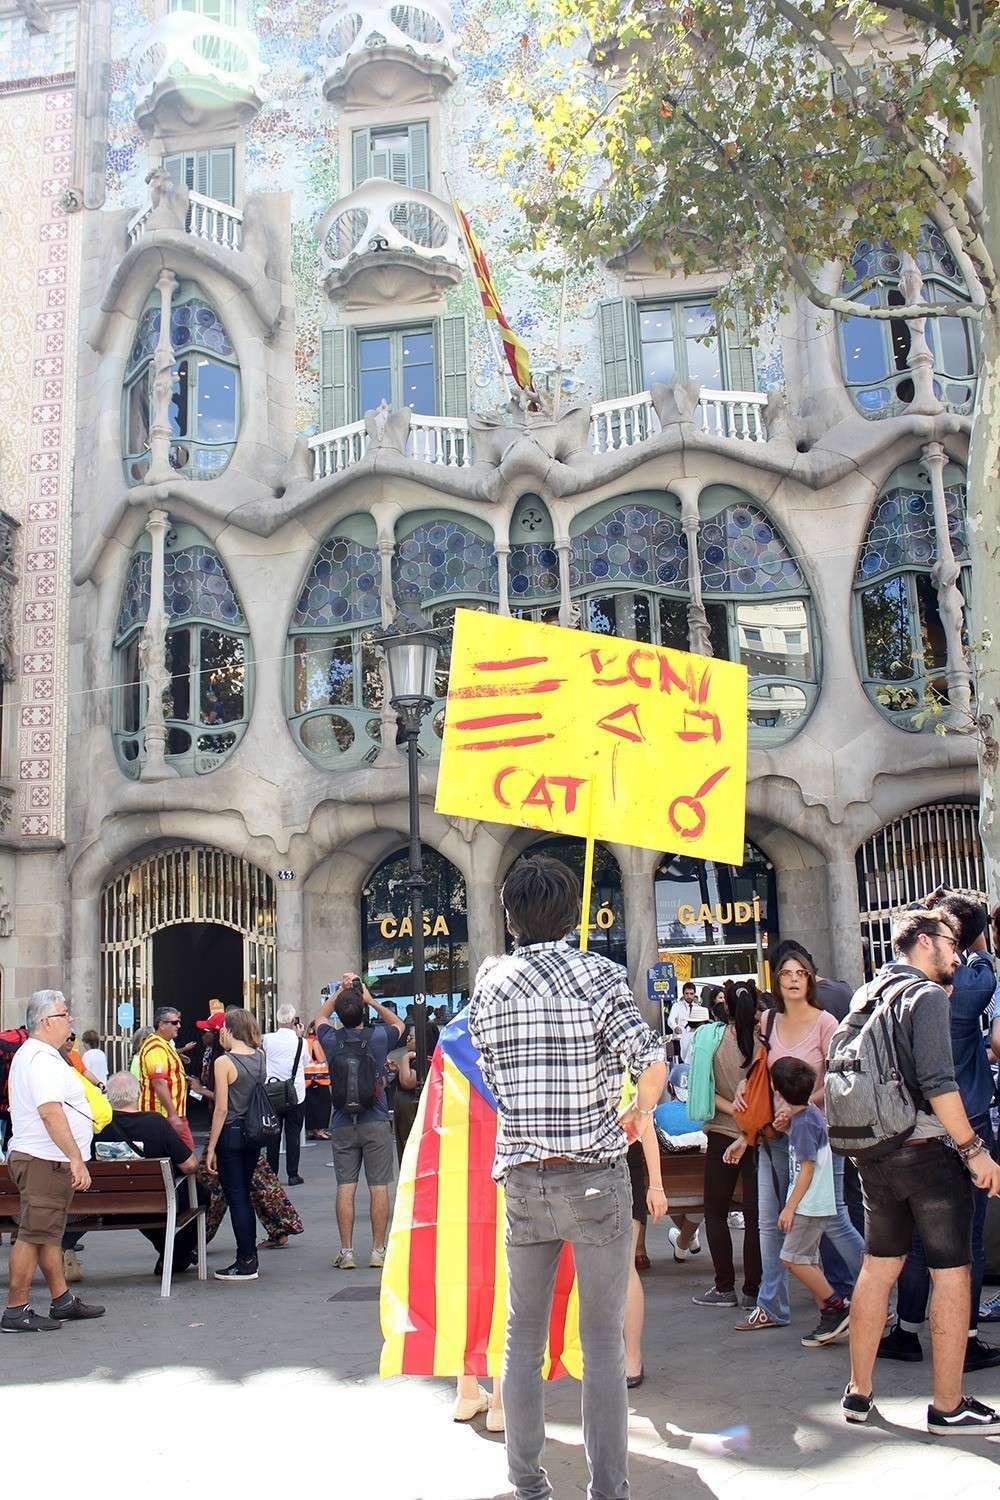 [:en]Miroslavo’s Public Art: Catalunya’s Diada Celebration in Barcelona[:] [:cs]Veřejné umění Miroslava: Oslavy Diada v Barceloně, Catalunya[:] [:es]Celebración Diada de Catalunya en Barcelona[:]